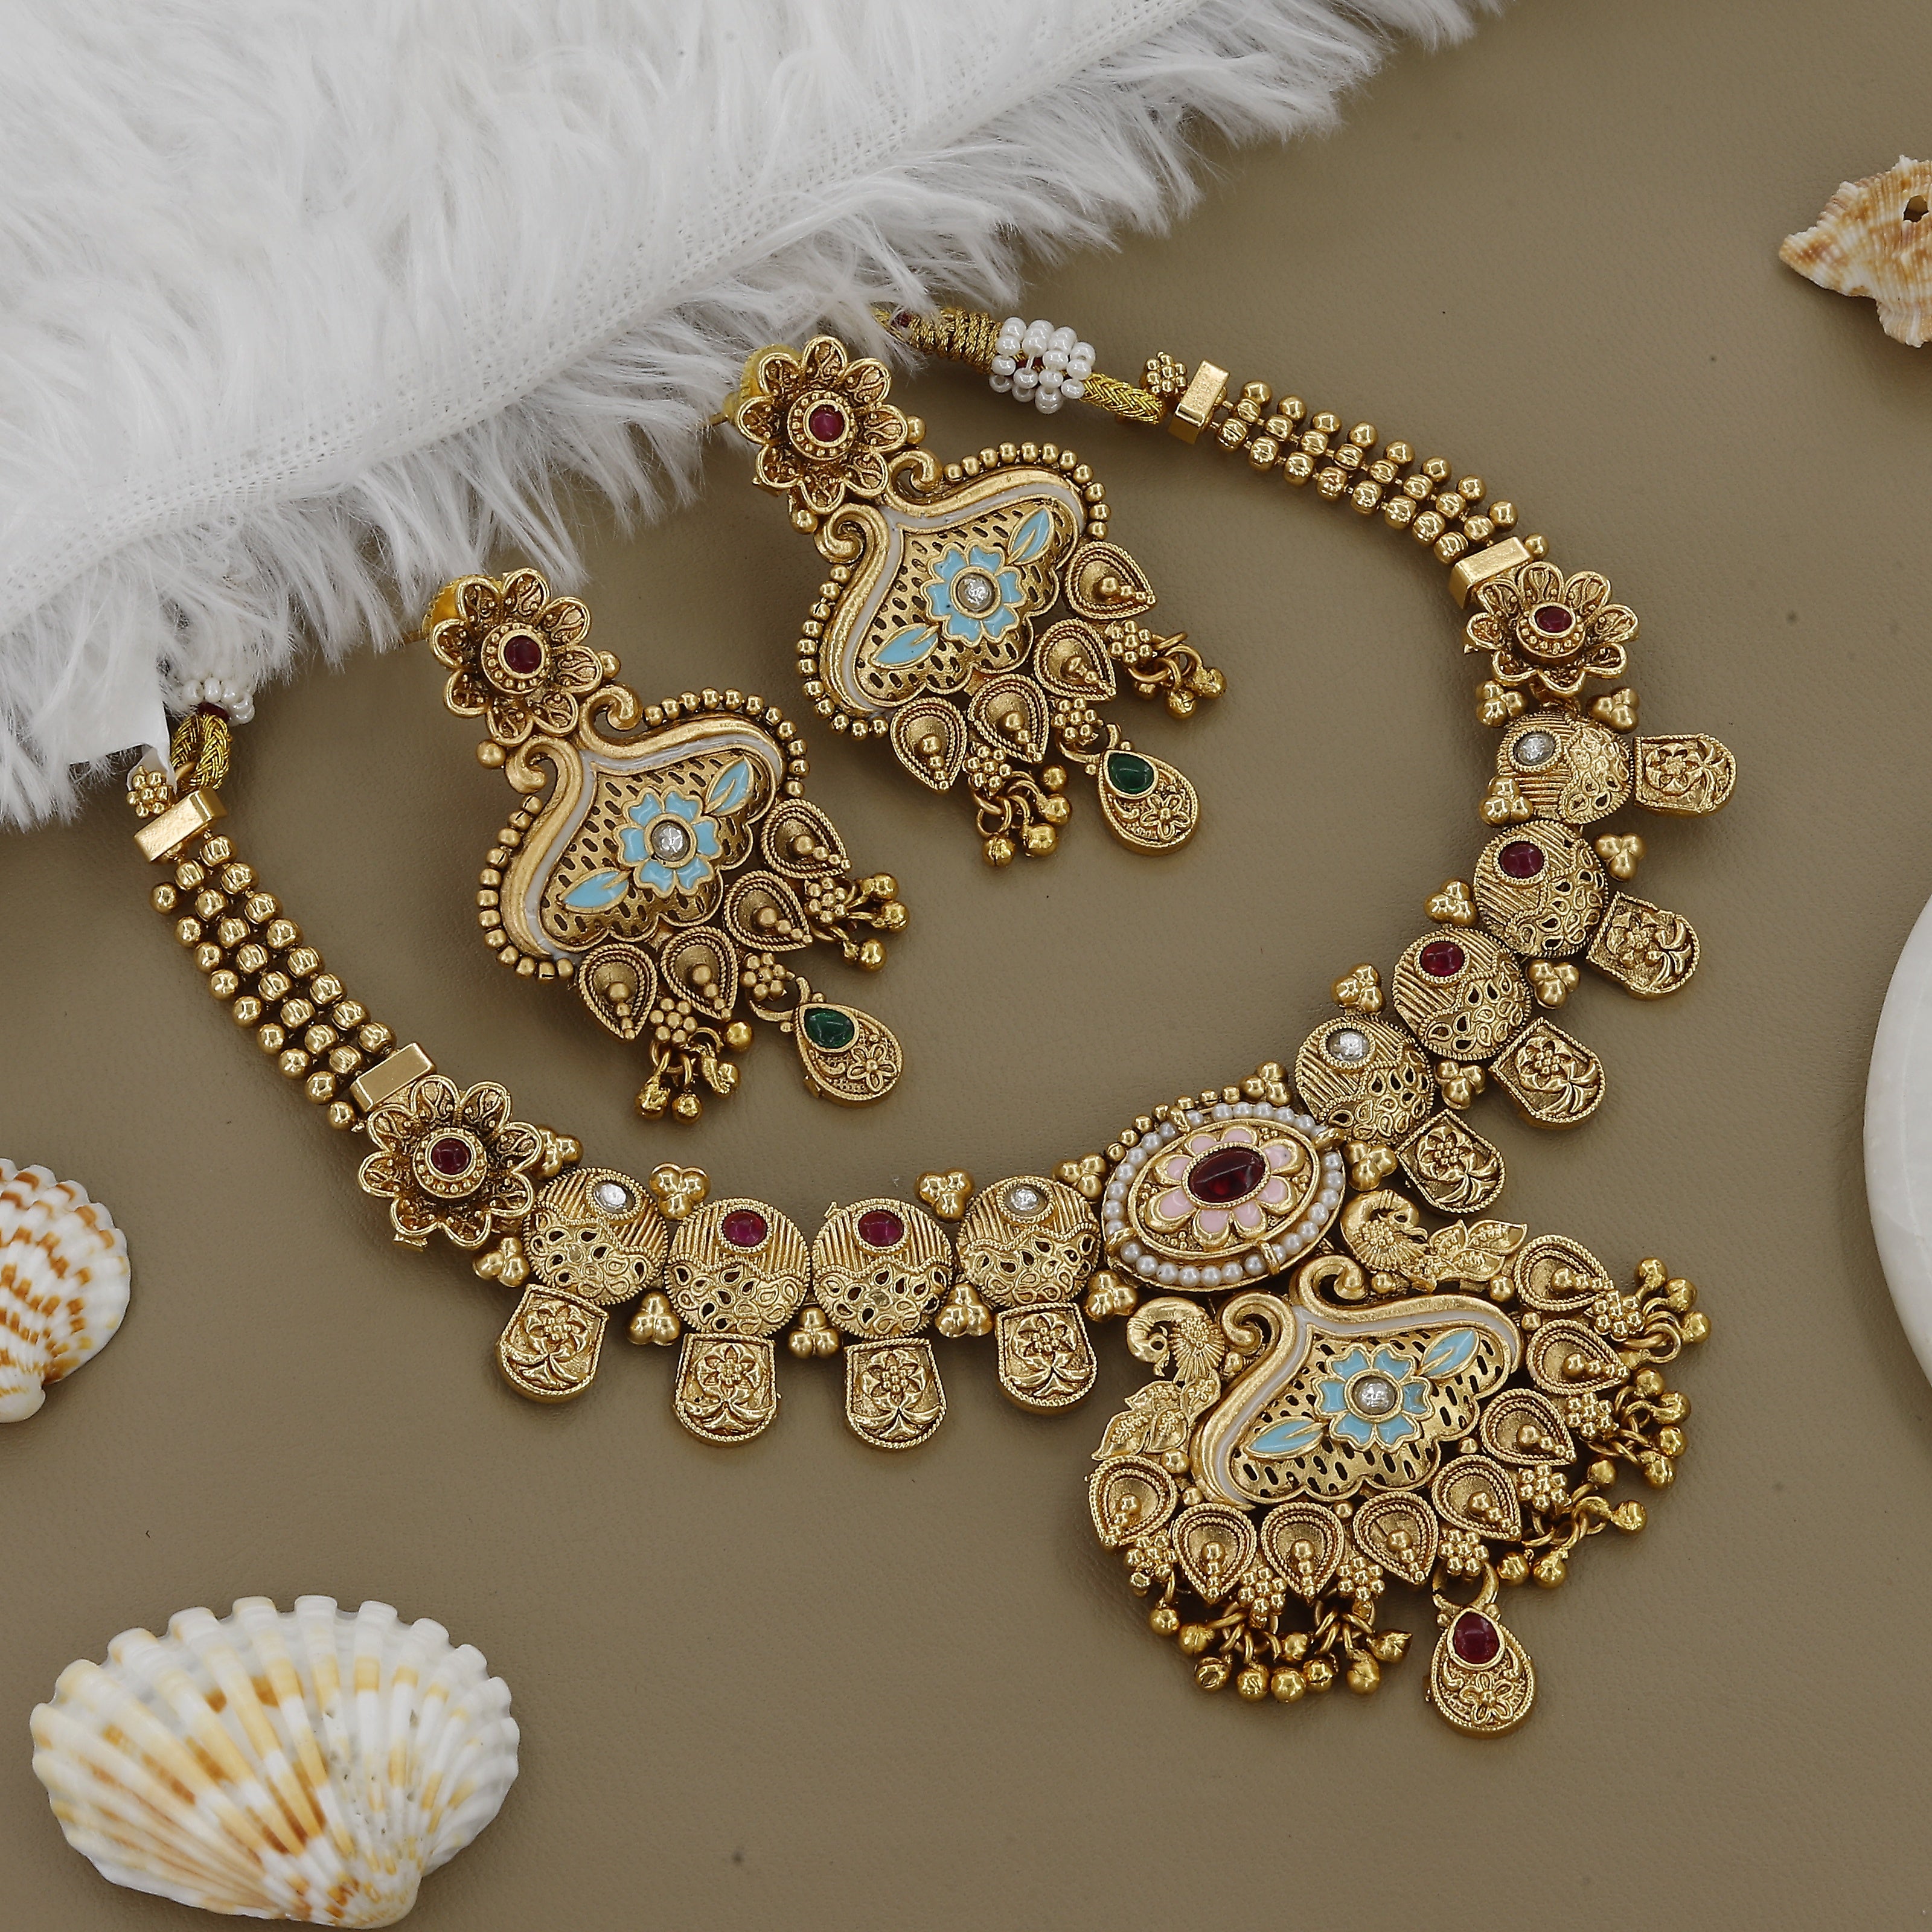 Antique Necklace With Unique Earrings